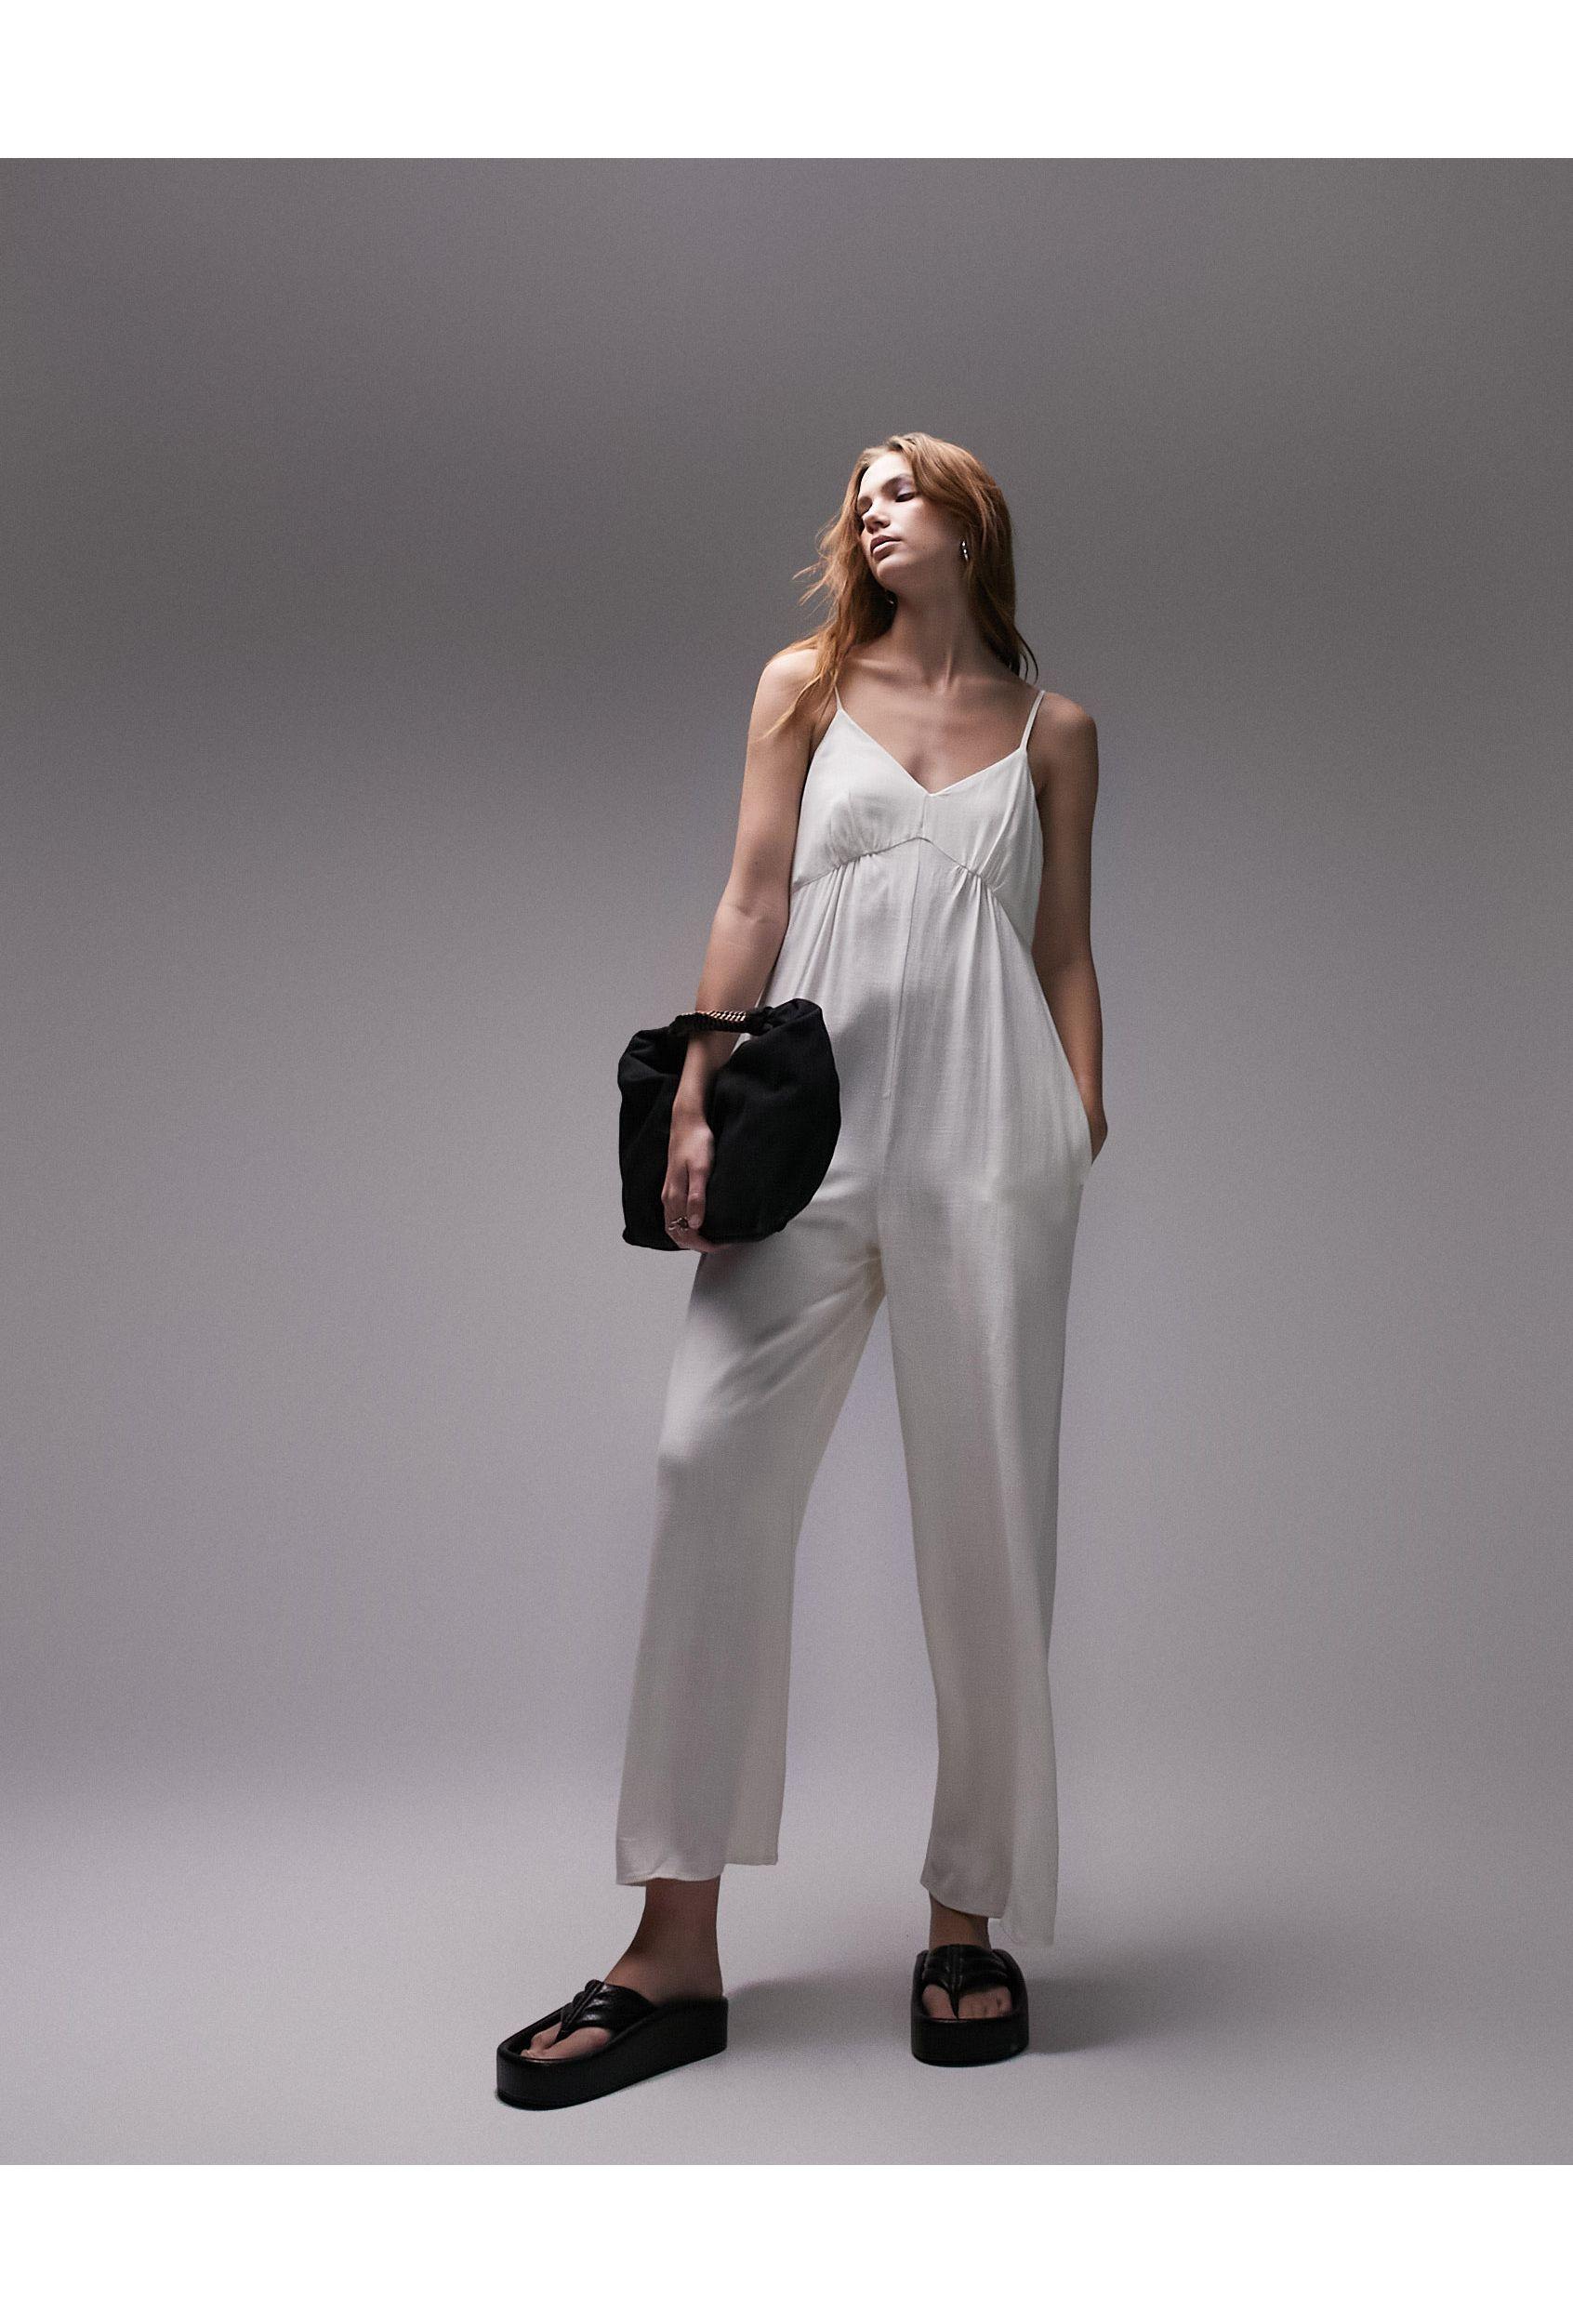 Reiss Carmen Plain Linen Blend Jumpsuit, White, 6